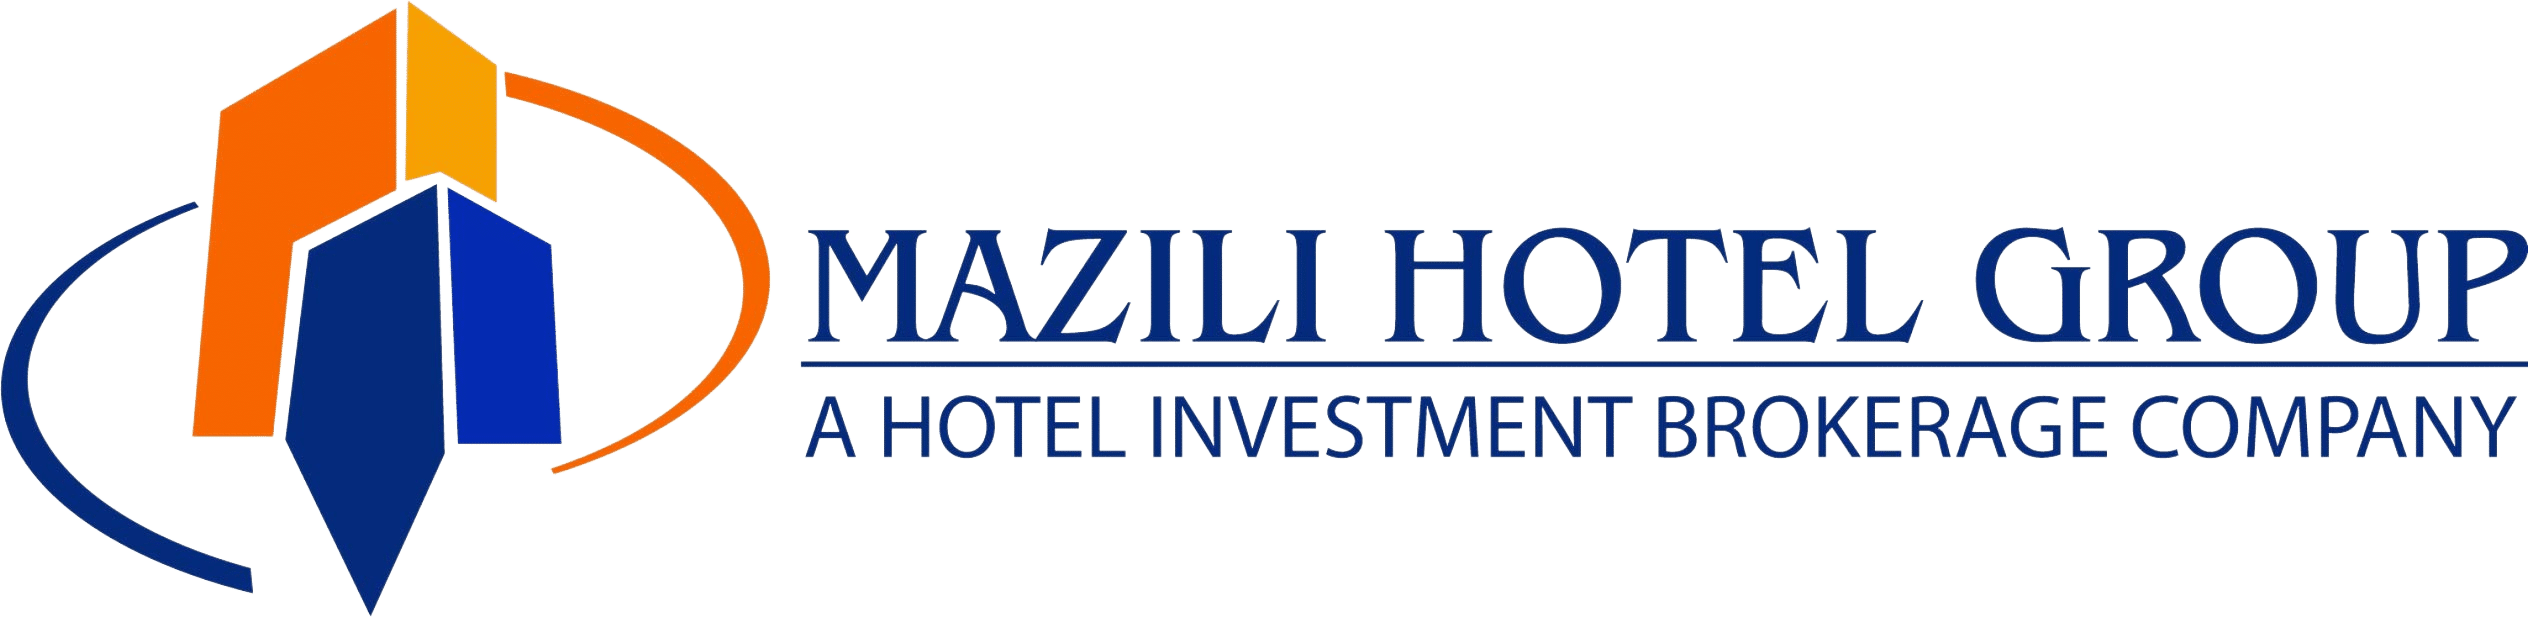 Mazili Hotel Group